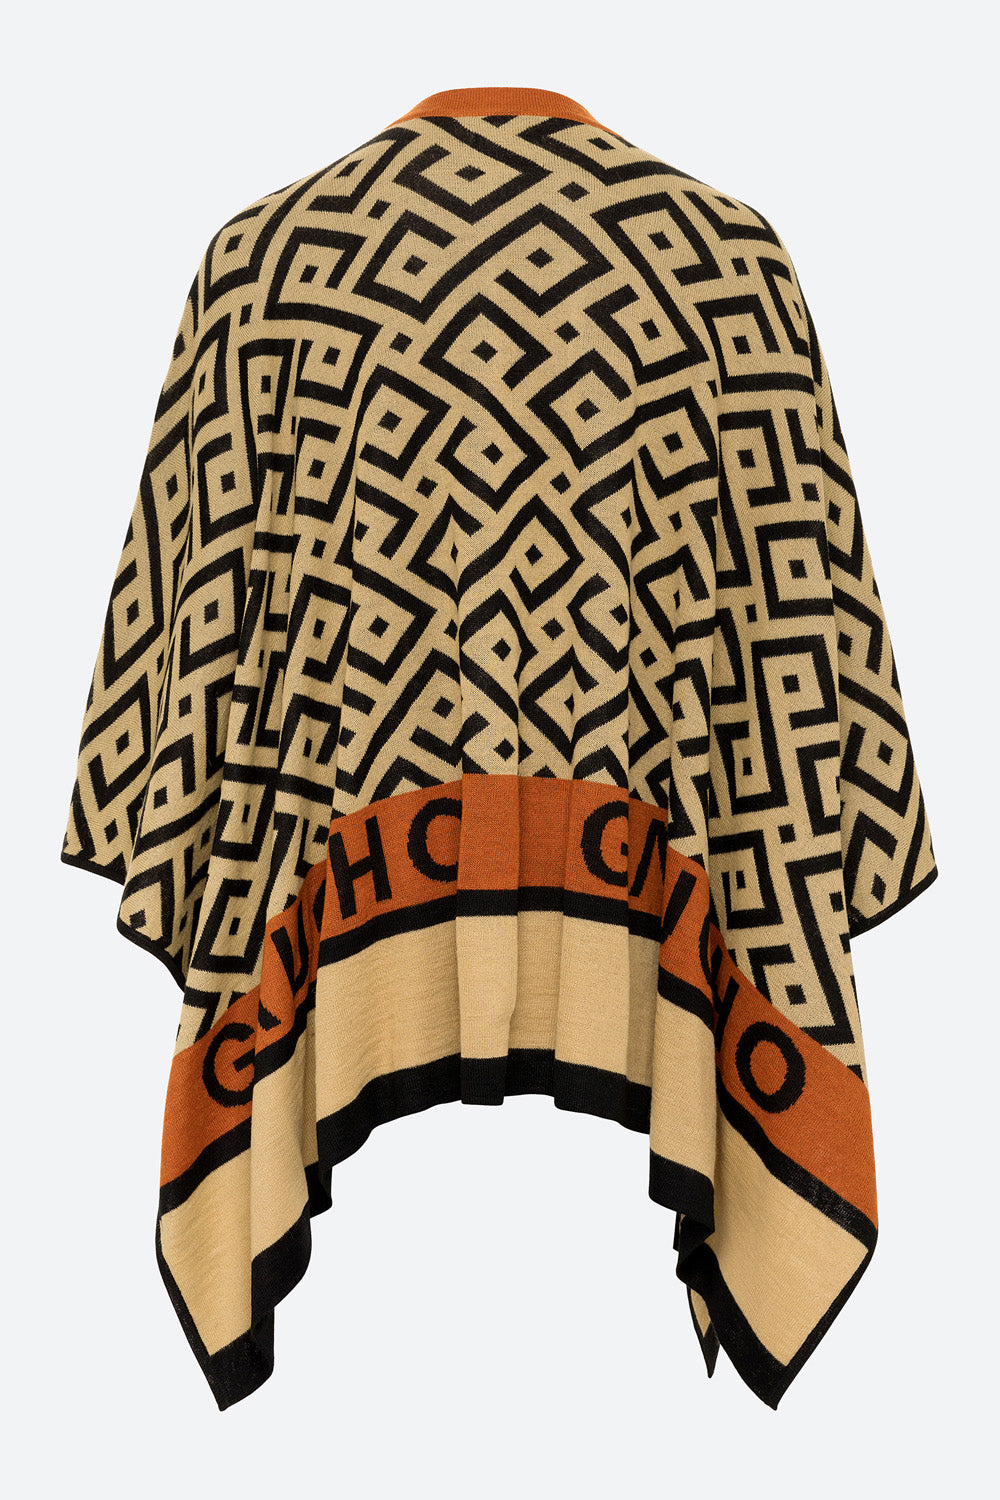 Gaucho - Buenos Aires Men's Silk Herradura Pocket Square in Camel